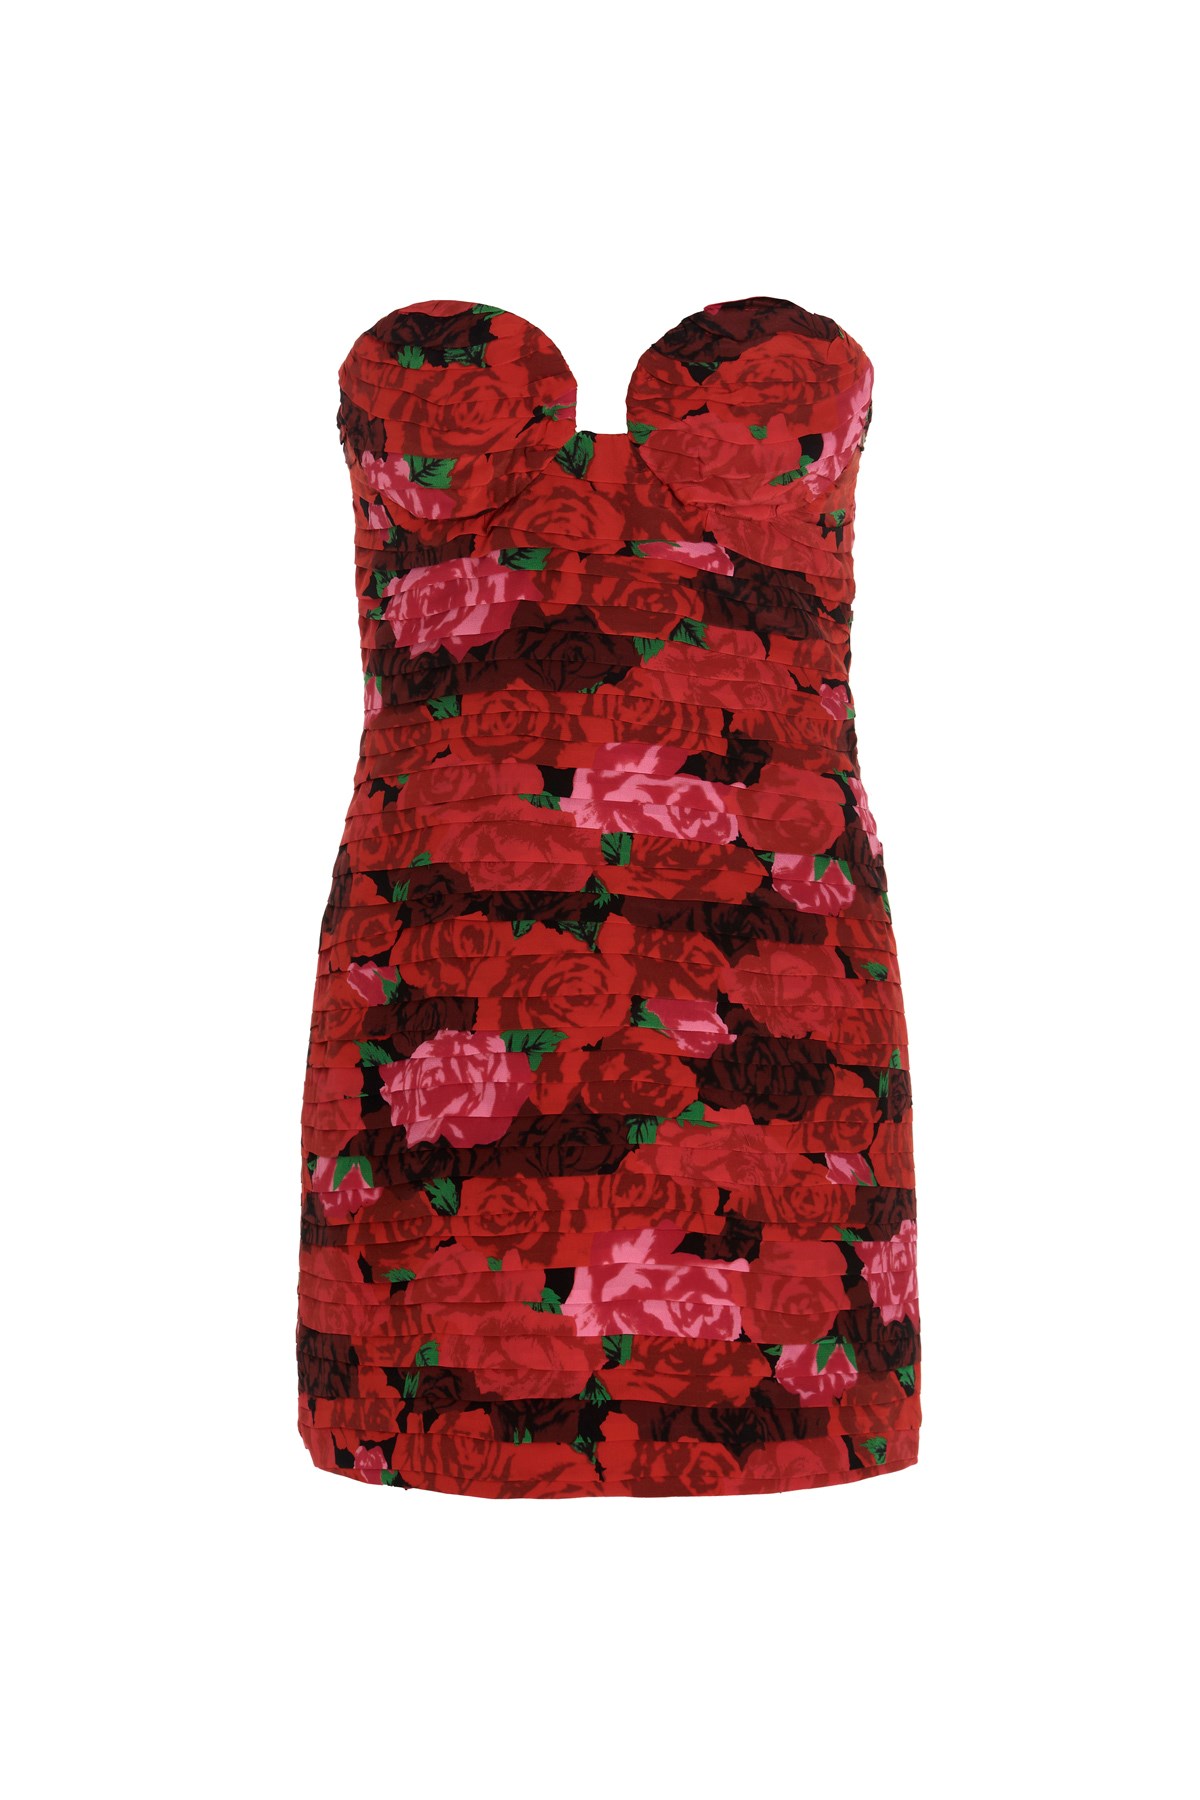 MAGDA BUTRYM Roses Print Dress